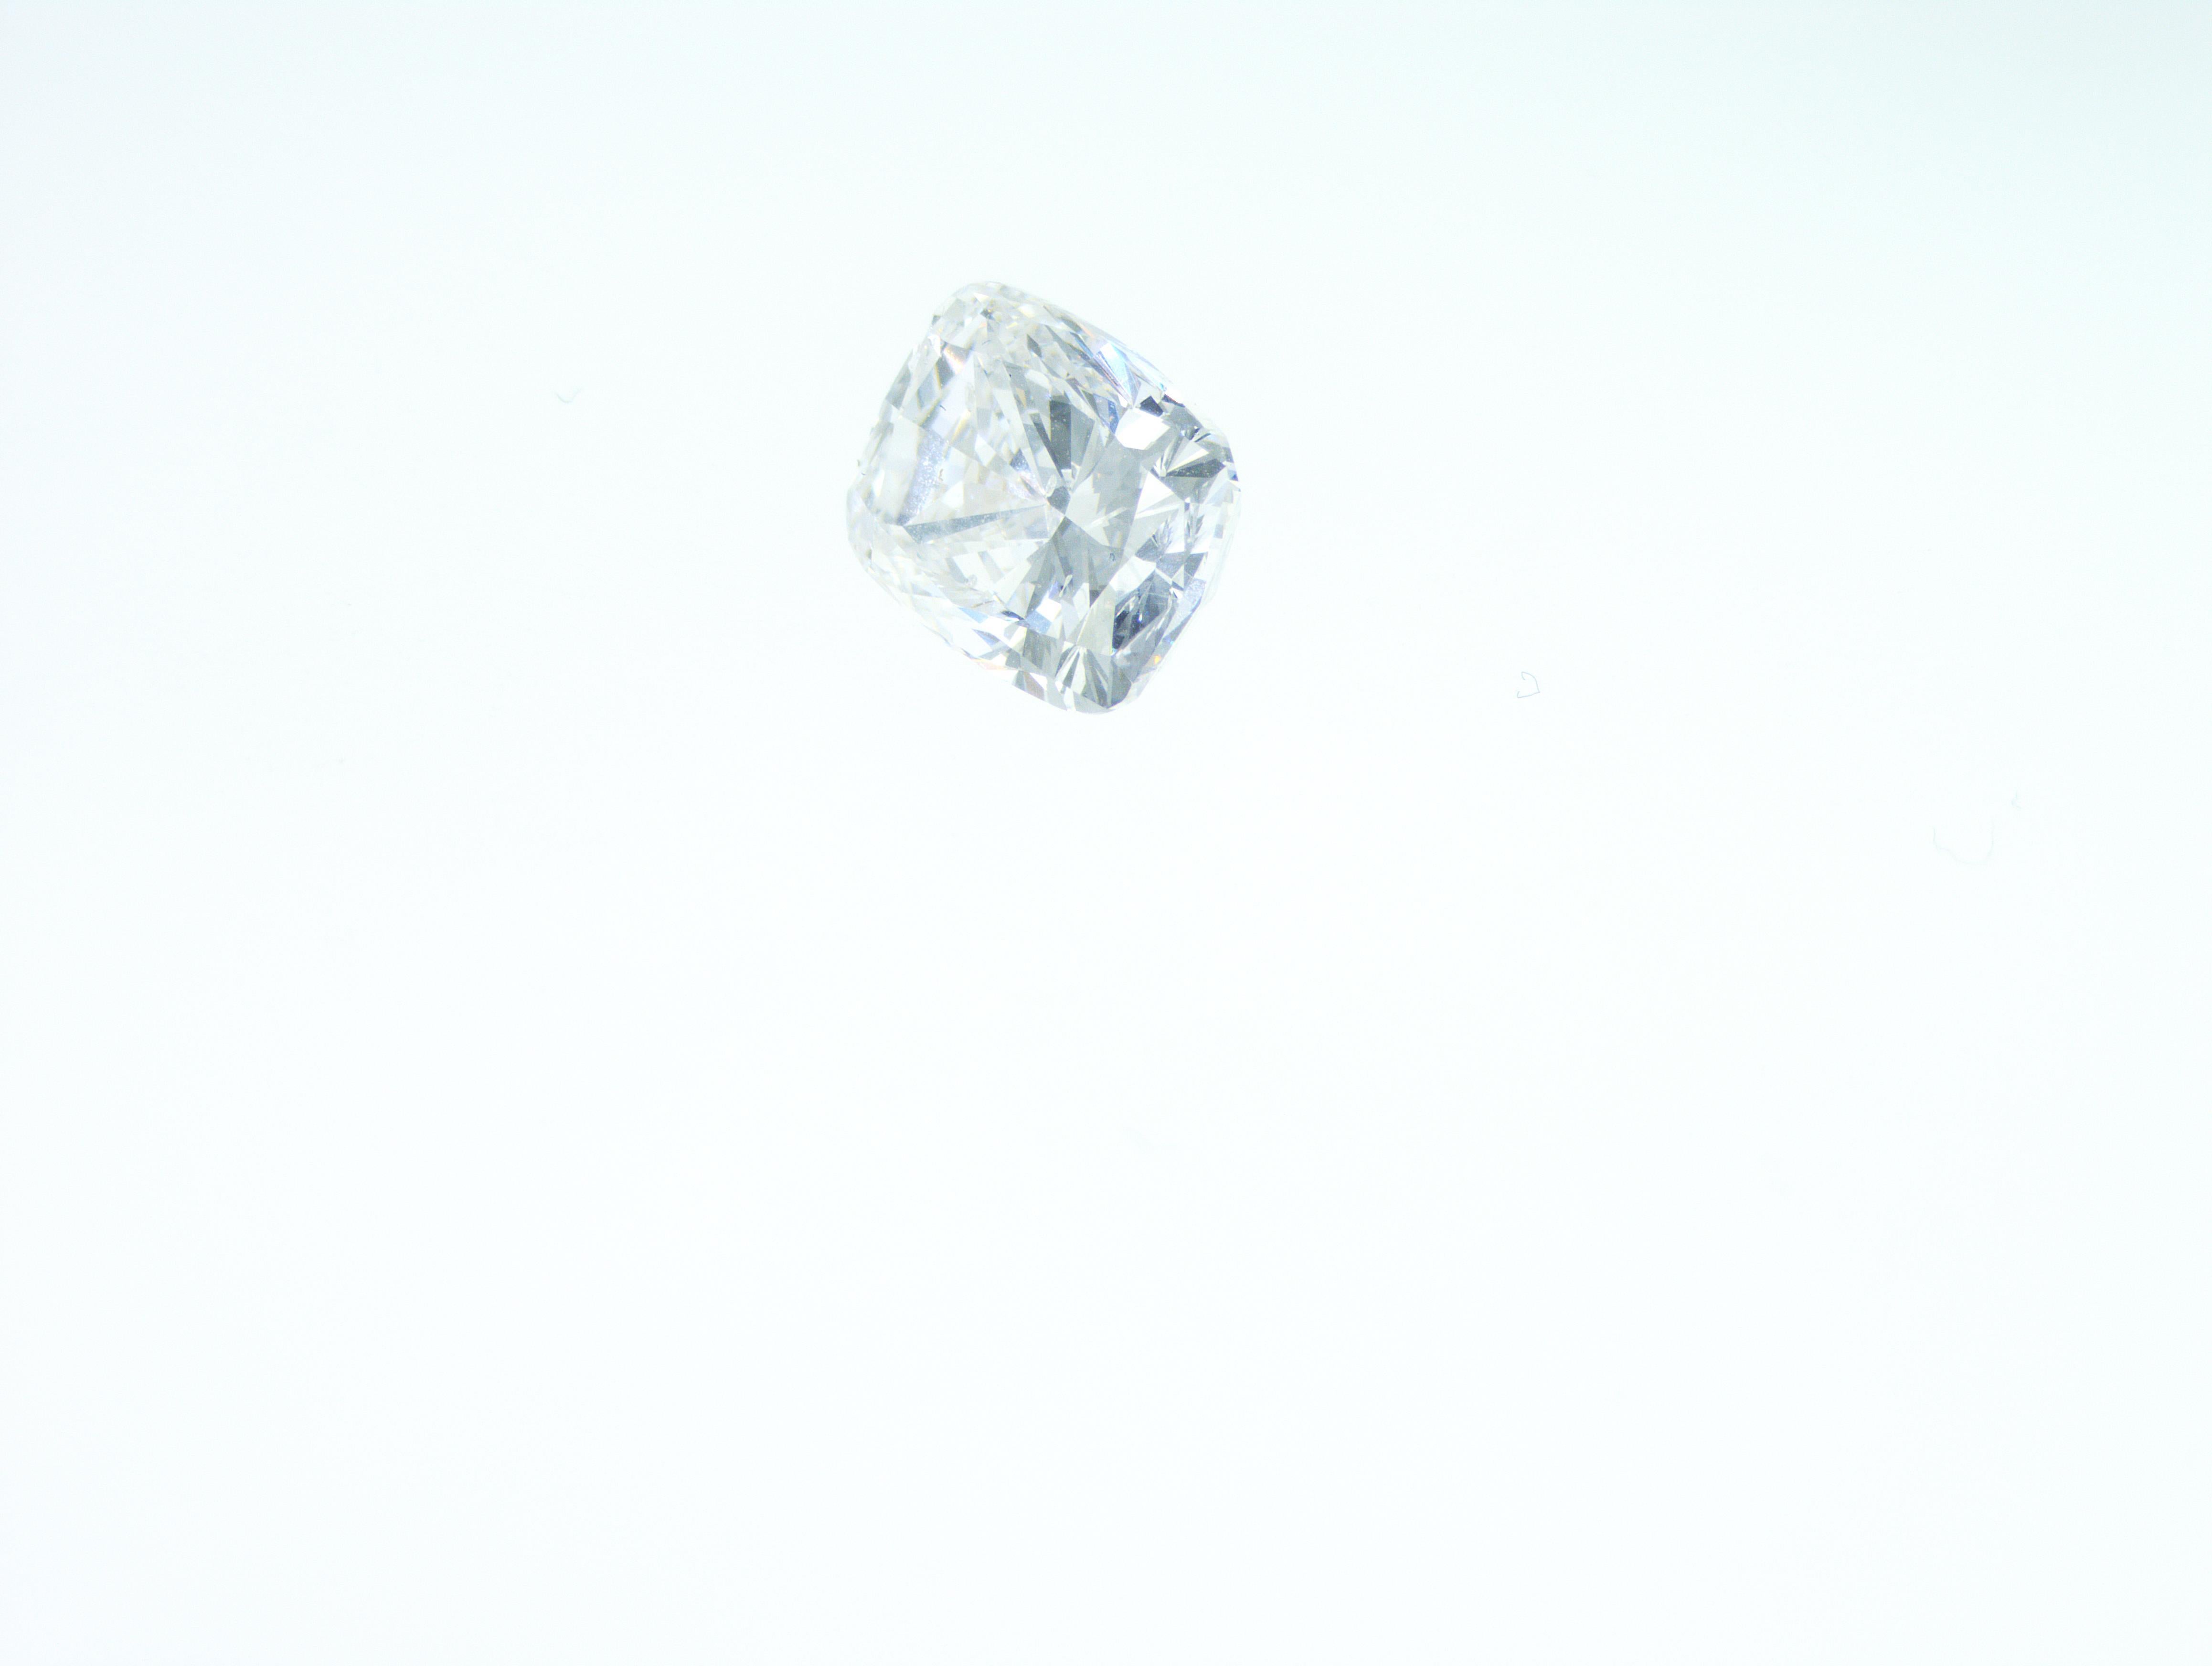 Modern HRDAntwerp certified 3.00 carat E colour (exceptional white) Diamond